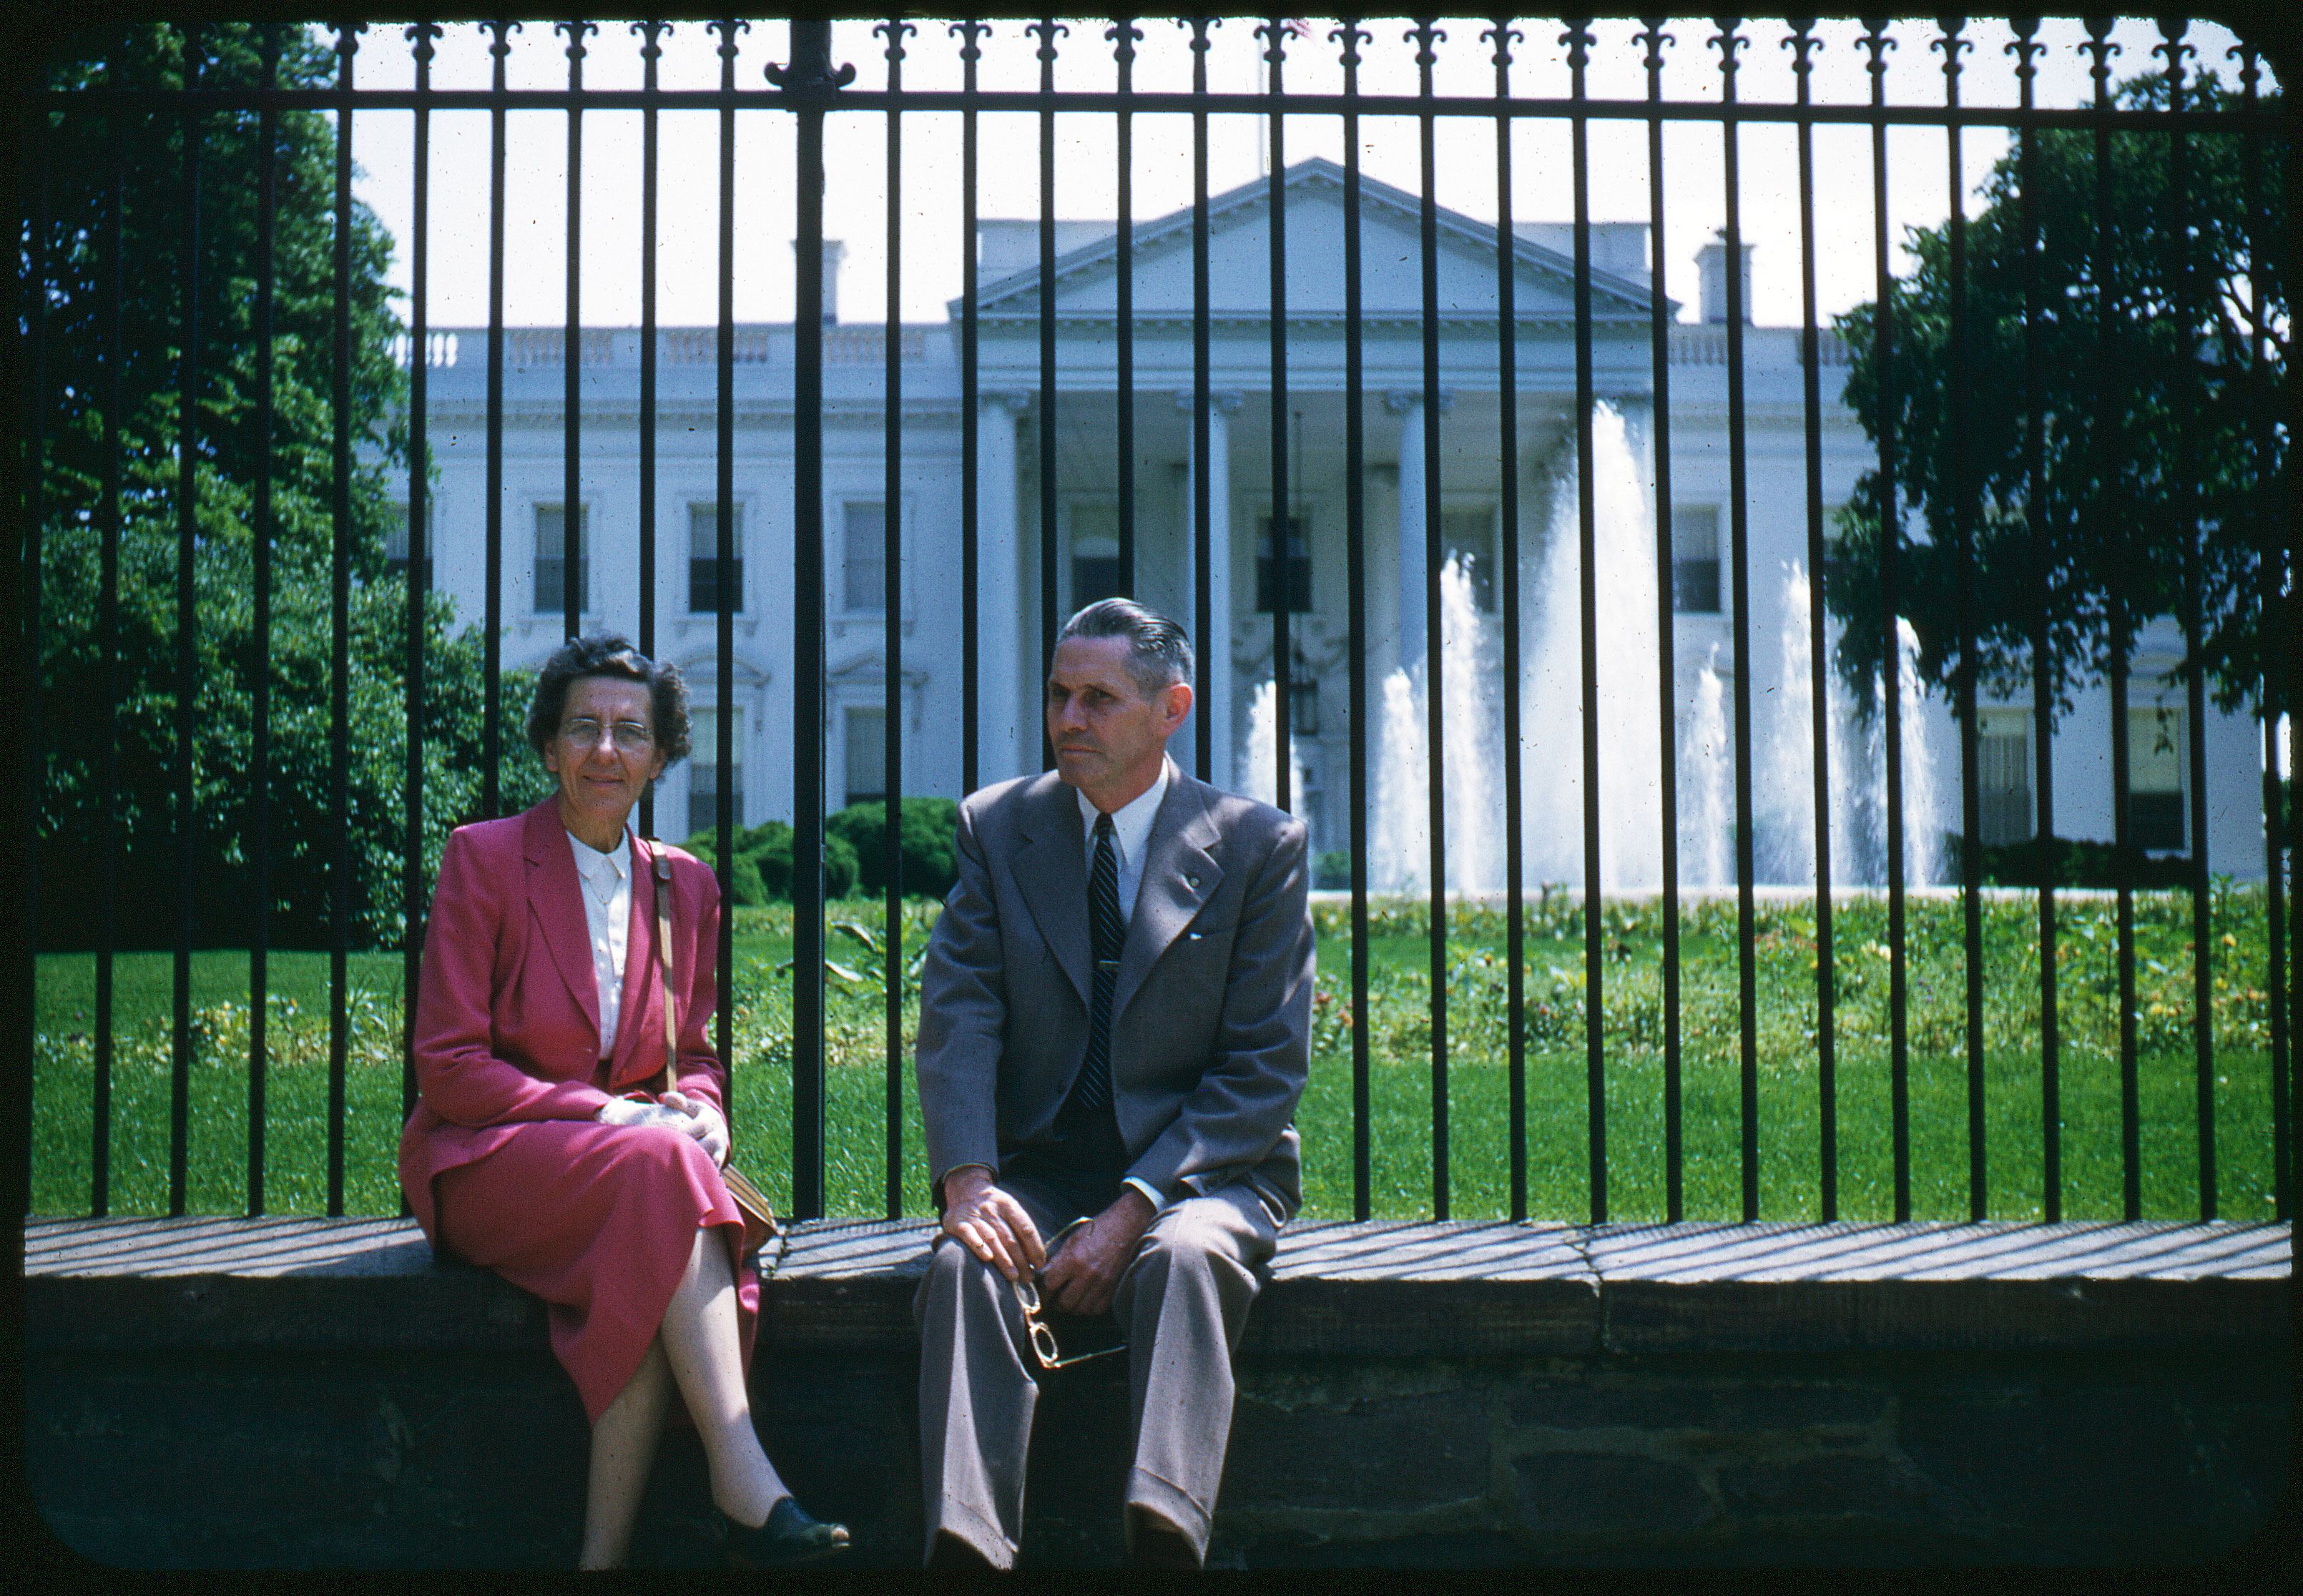 My paternal grandparents visiting Washington, D.C. View full size.